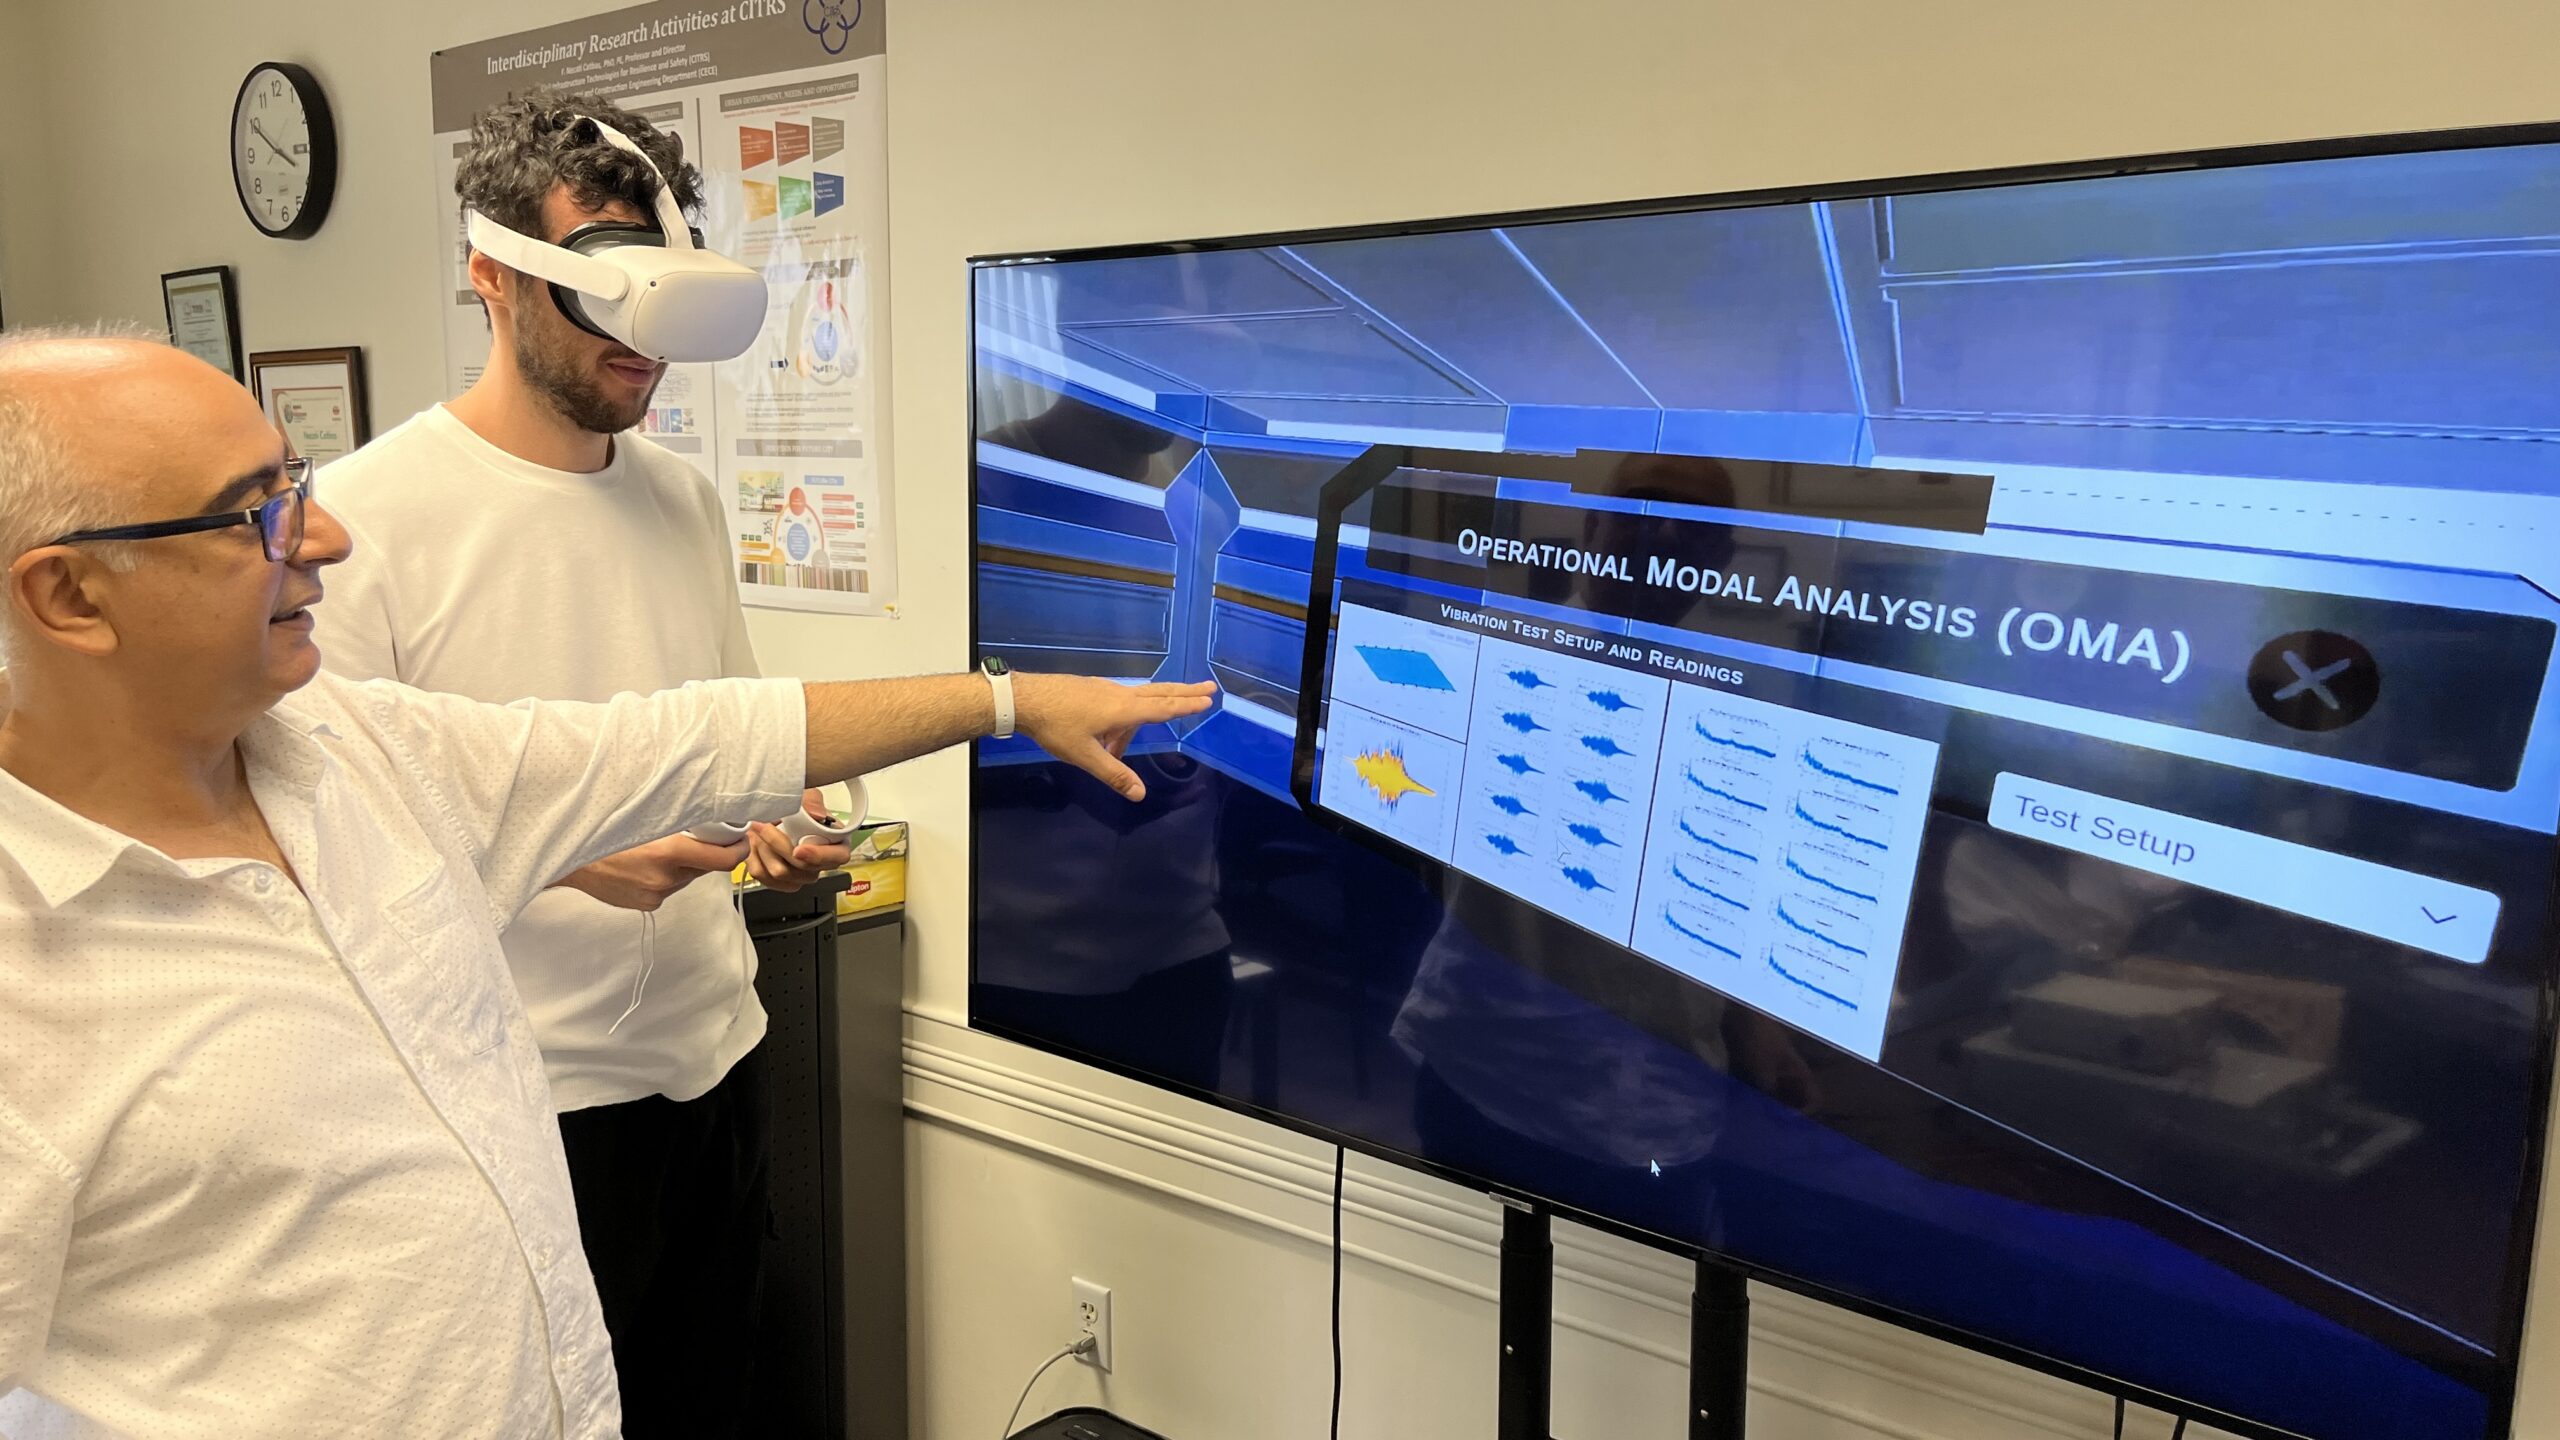 Necati Catbas points to a virtual reality screen